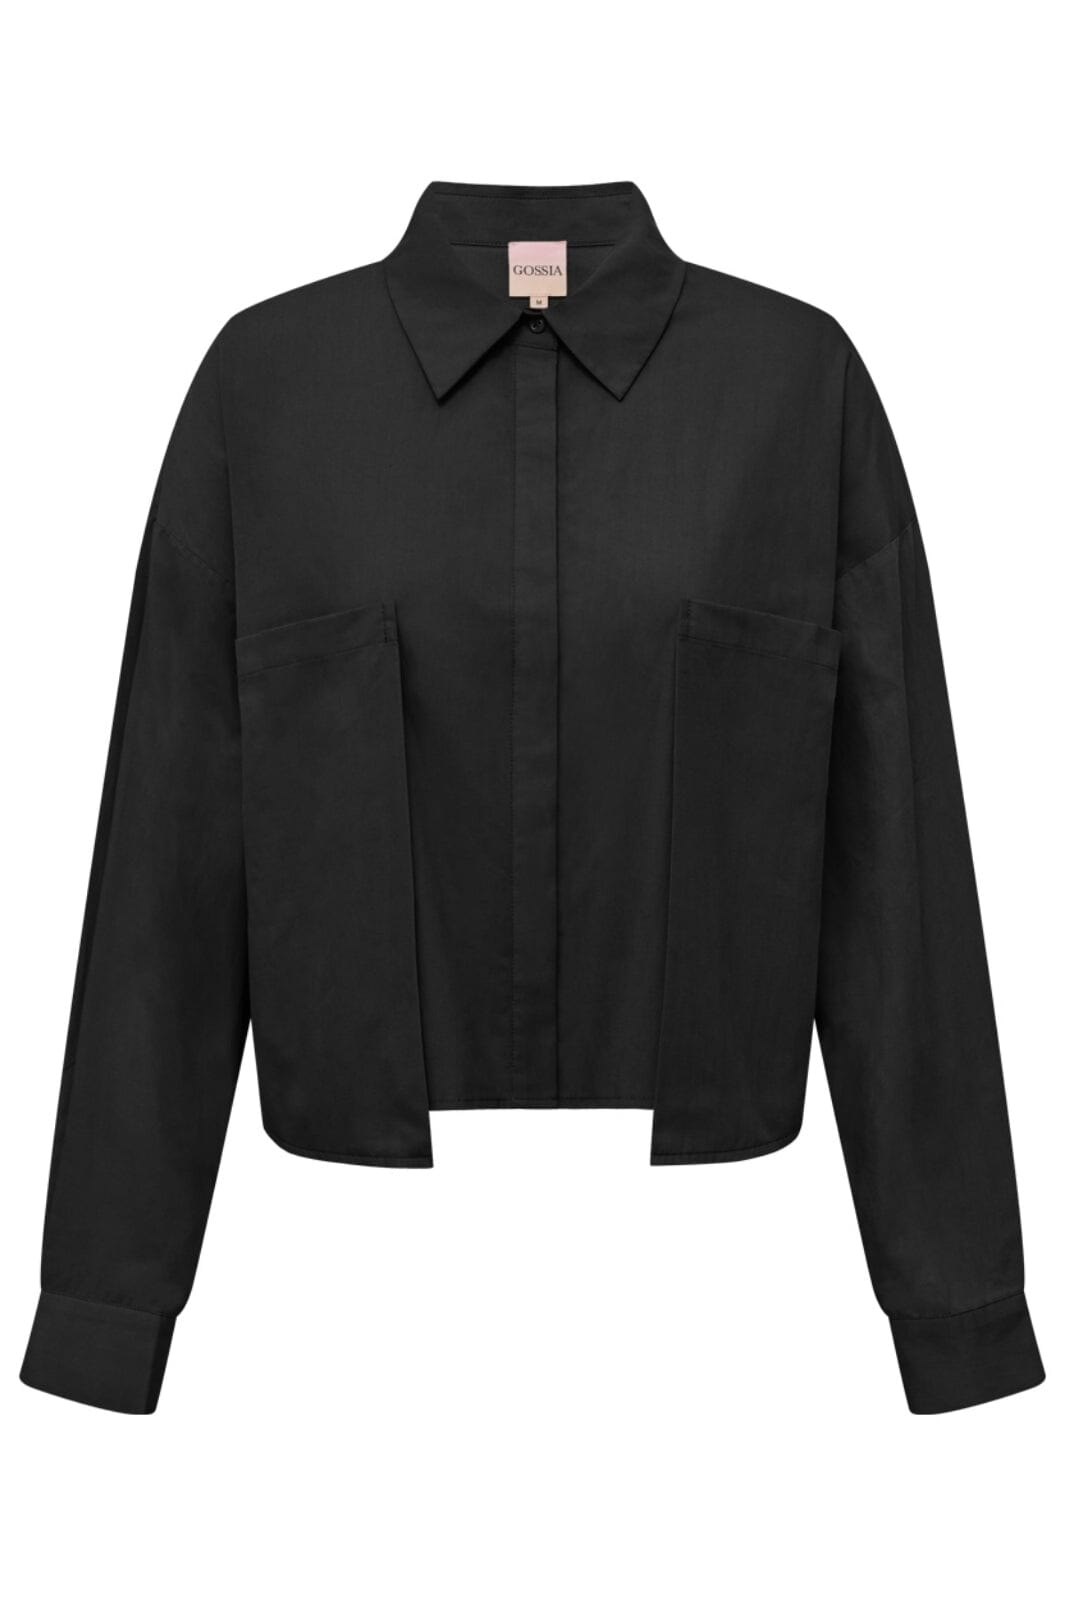 Gossia - AlphaGO Shirt - Black Skjorter 